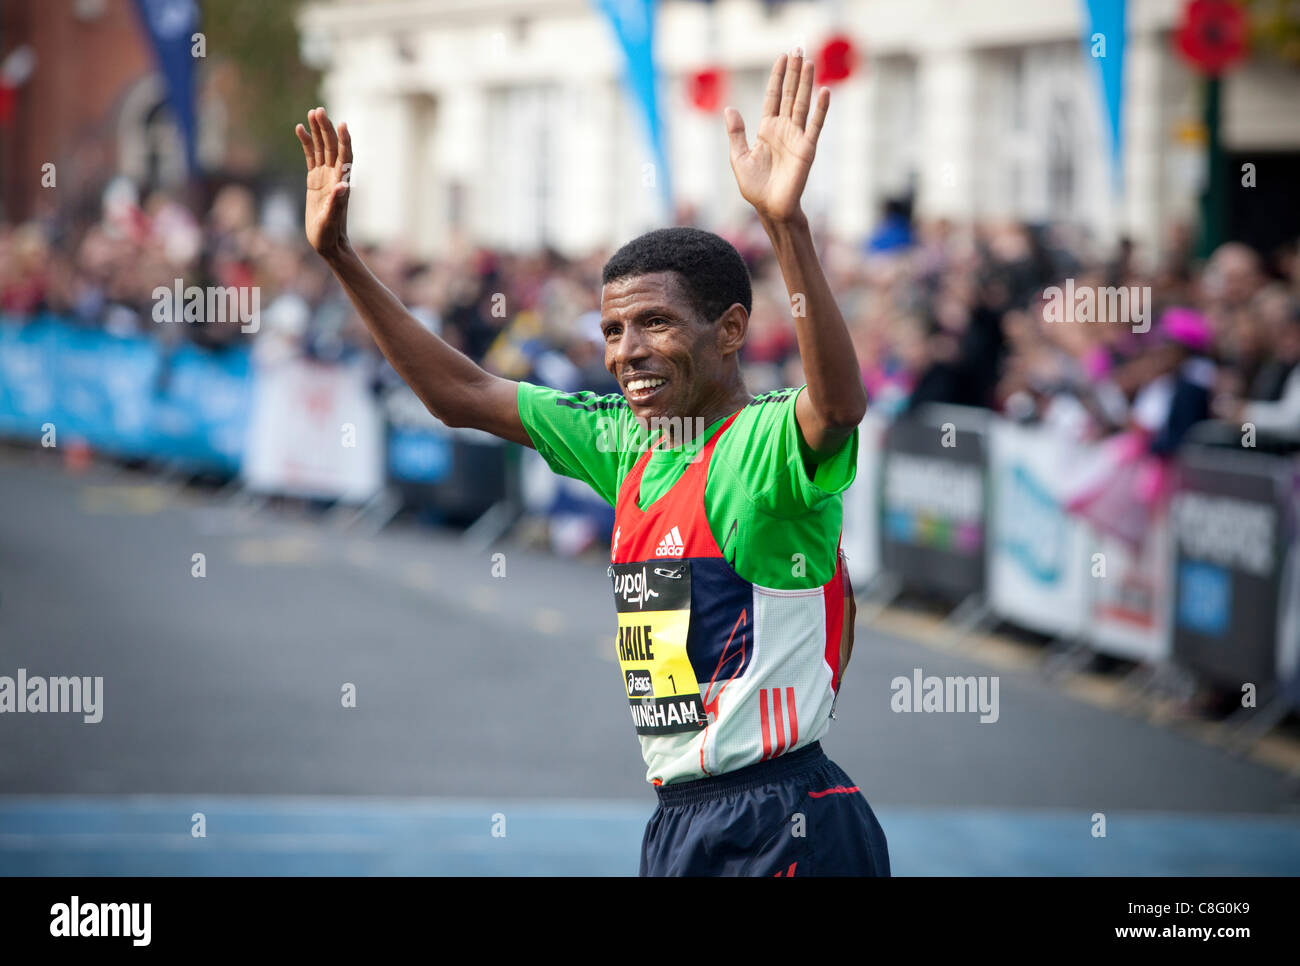 Ethiopian runner Haile Gebrselassie wins  the Bupa Great Birmingham Run, Birmingham, West Midlands, UK. The Half Marathon was run around the streets of Birmingham. Stock Photo